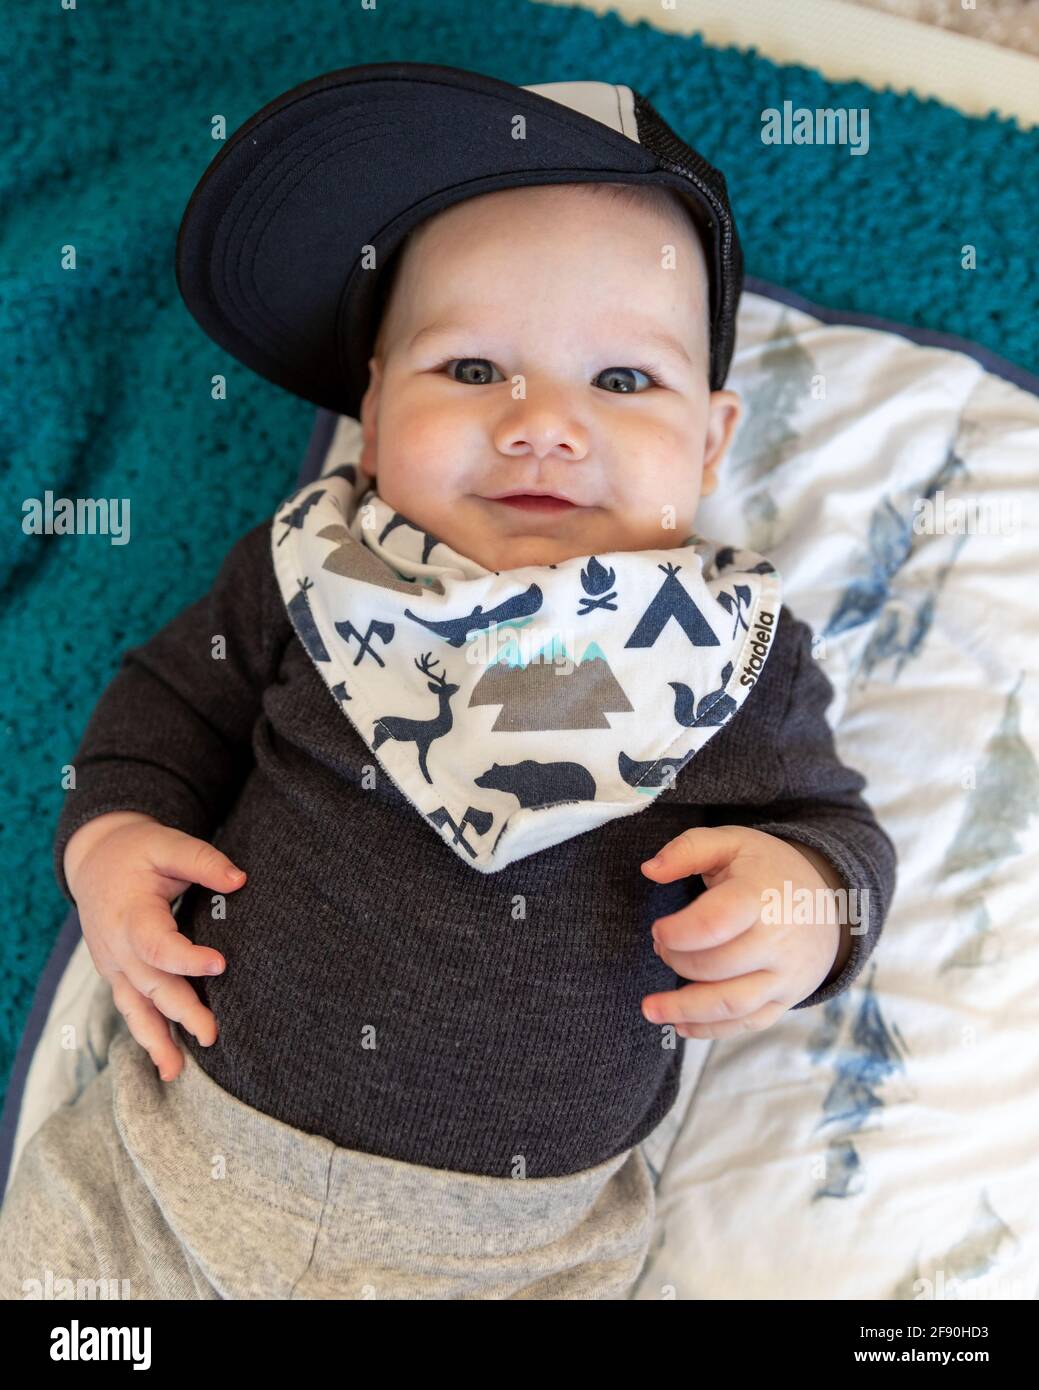 Happy baby boy smiling wearing baseball cap. Stock Photo